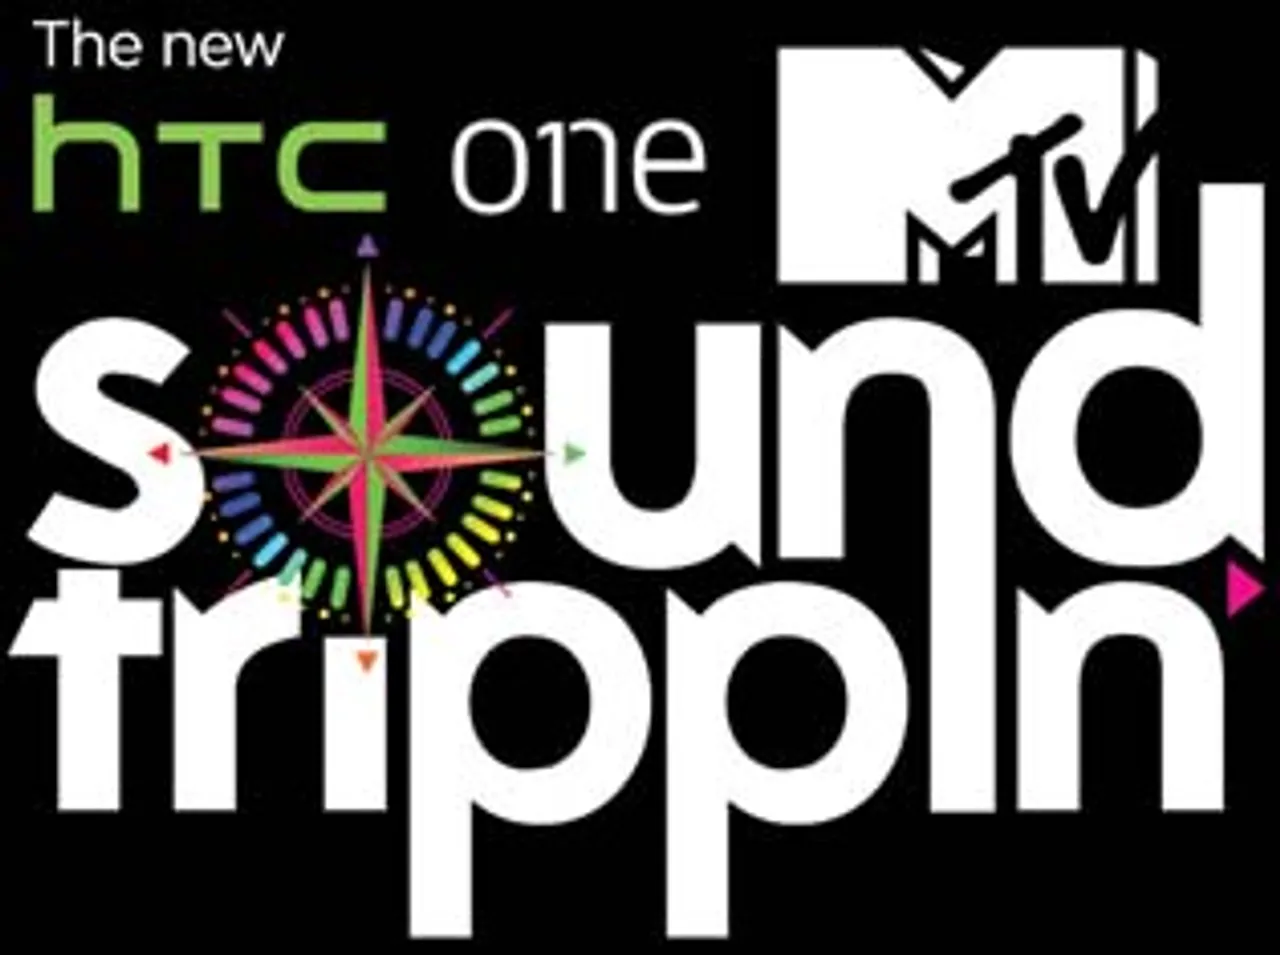 'MTV Sound Trippin' returns with Season 2